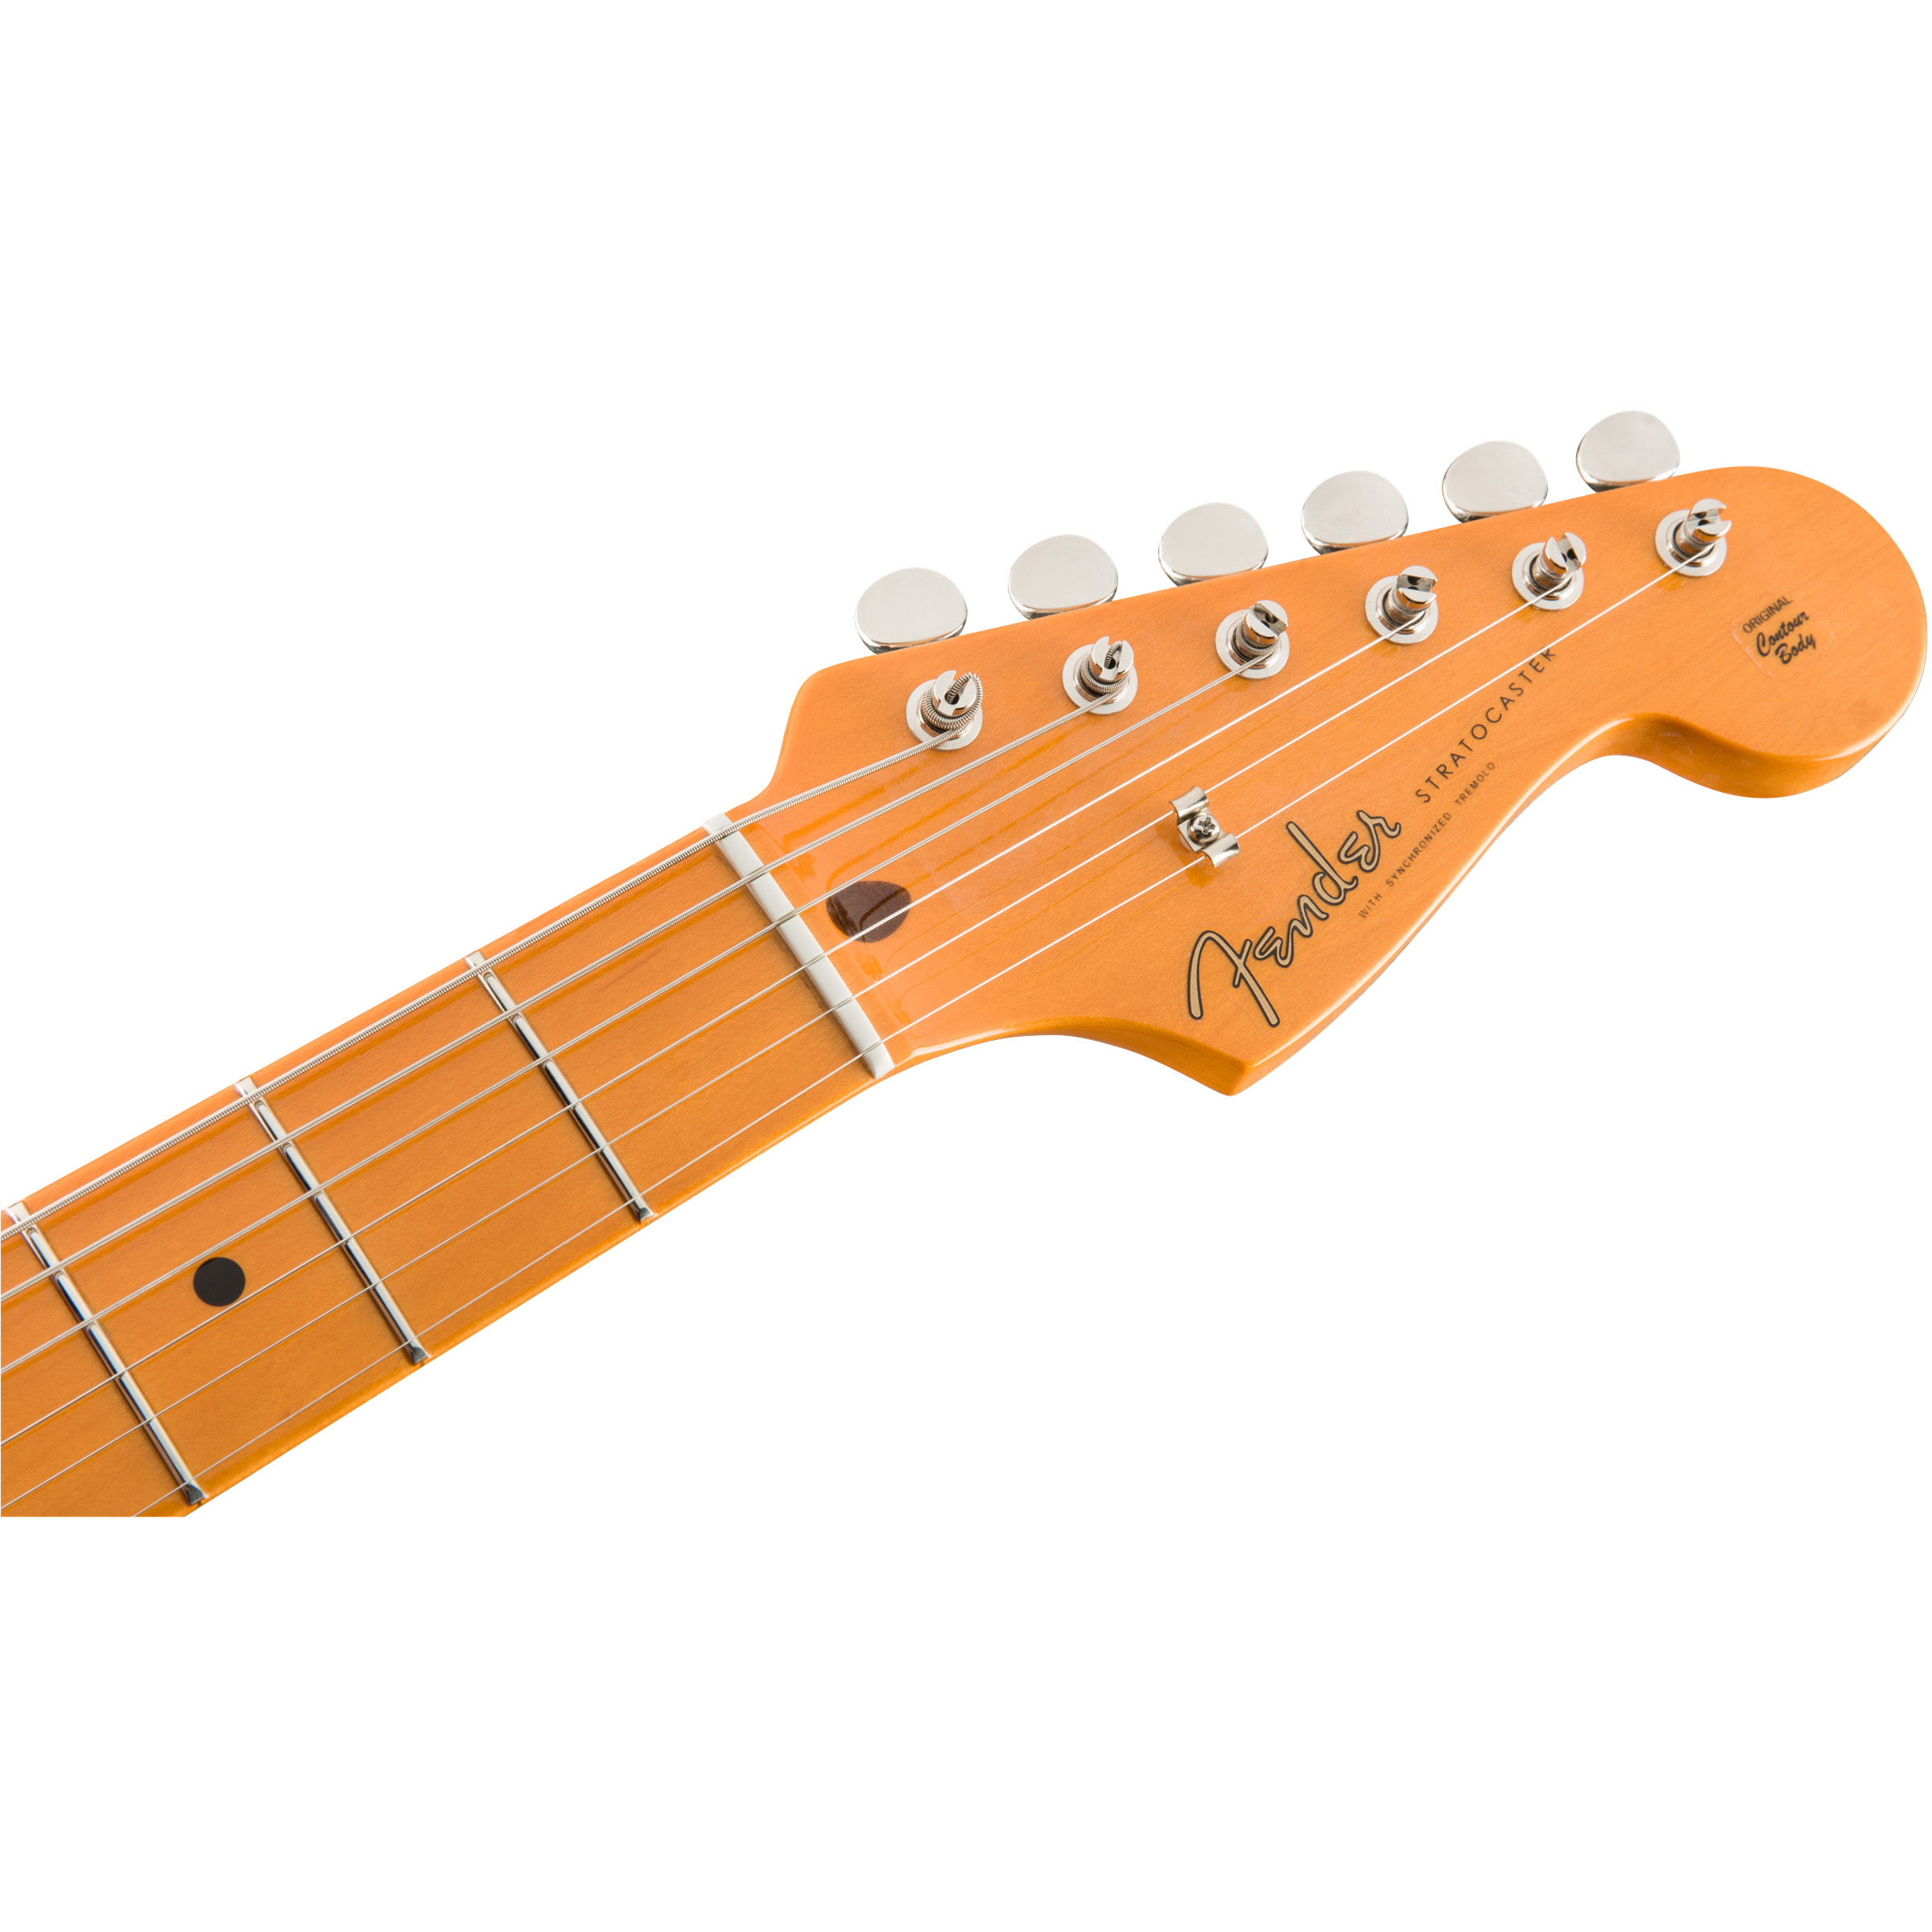 Stratocaster цена. Электрогитара Fender American professional Stratocaster. Электрогитара Fender David Gilmour Signature Stratocaster. Электрогитара Fender 1955 Heavy Relic Stratocaster. Фендер стратокастер кастом шоп.